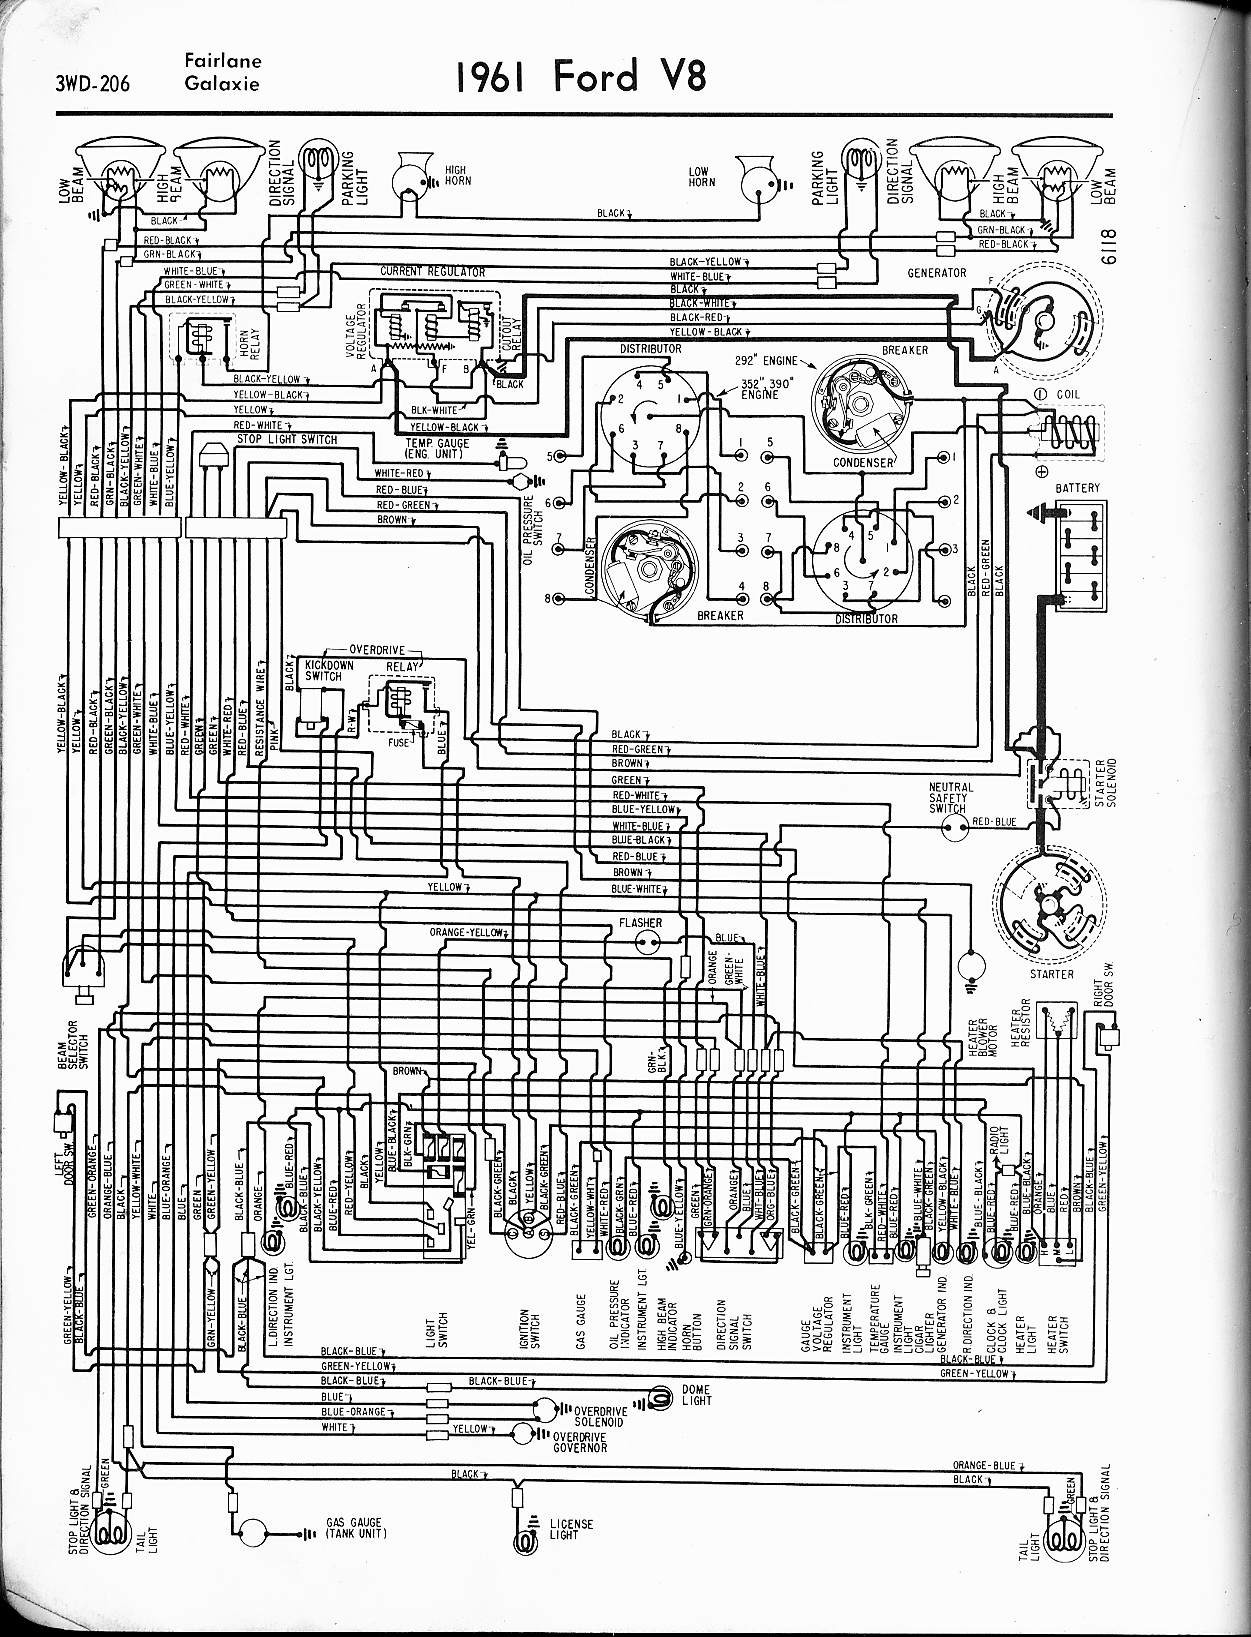 Amc 304 V8 Plug Wiring Diagram Amc 304 Engine Diagram Of Amc 304 V8 Plug Wiring Diagram